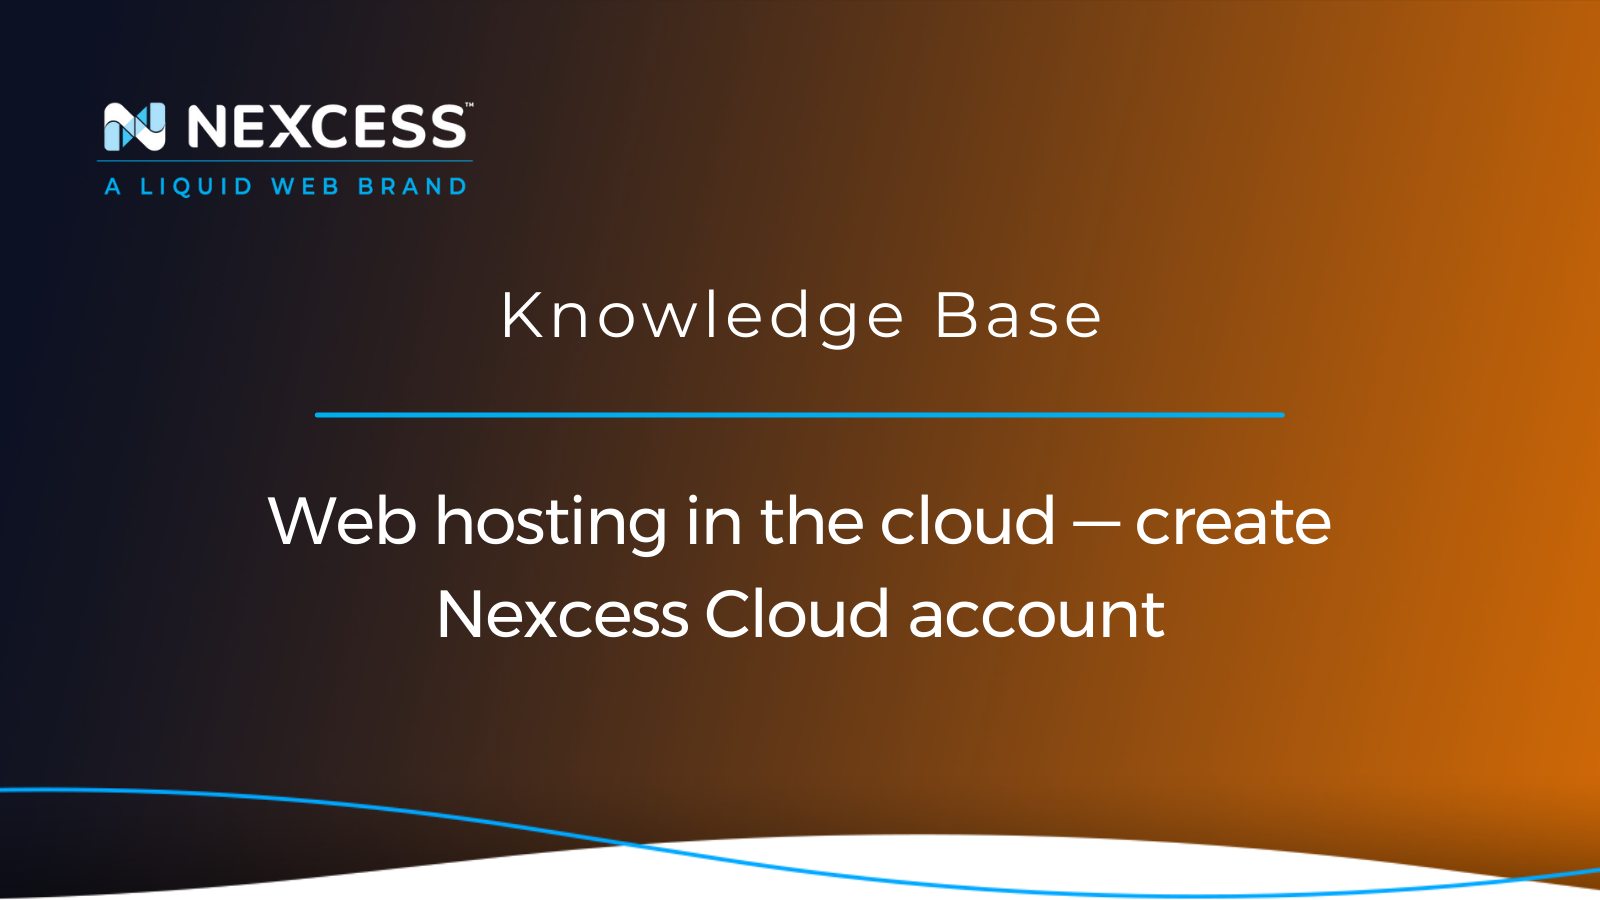 Web hosting in the cloud — create Nexcess Cloud account